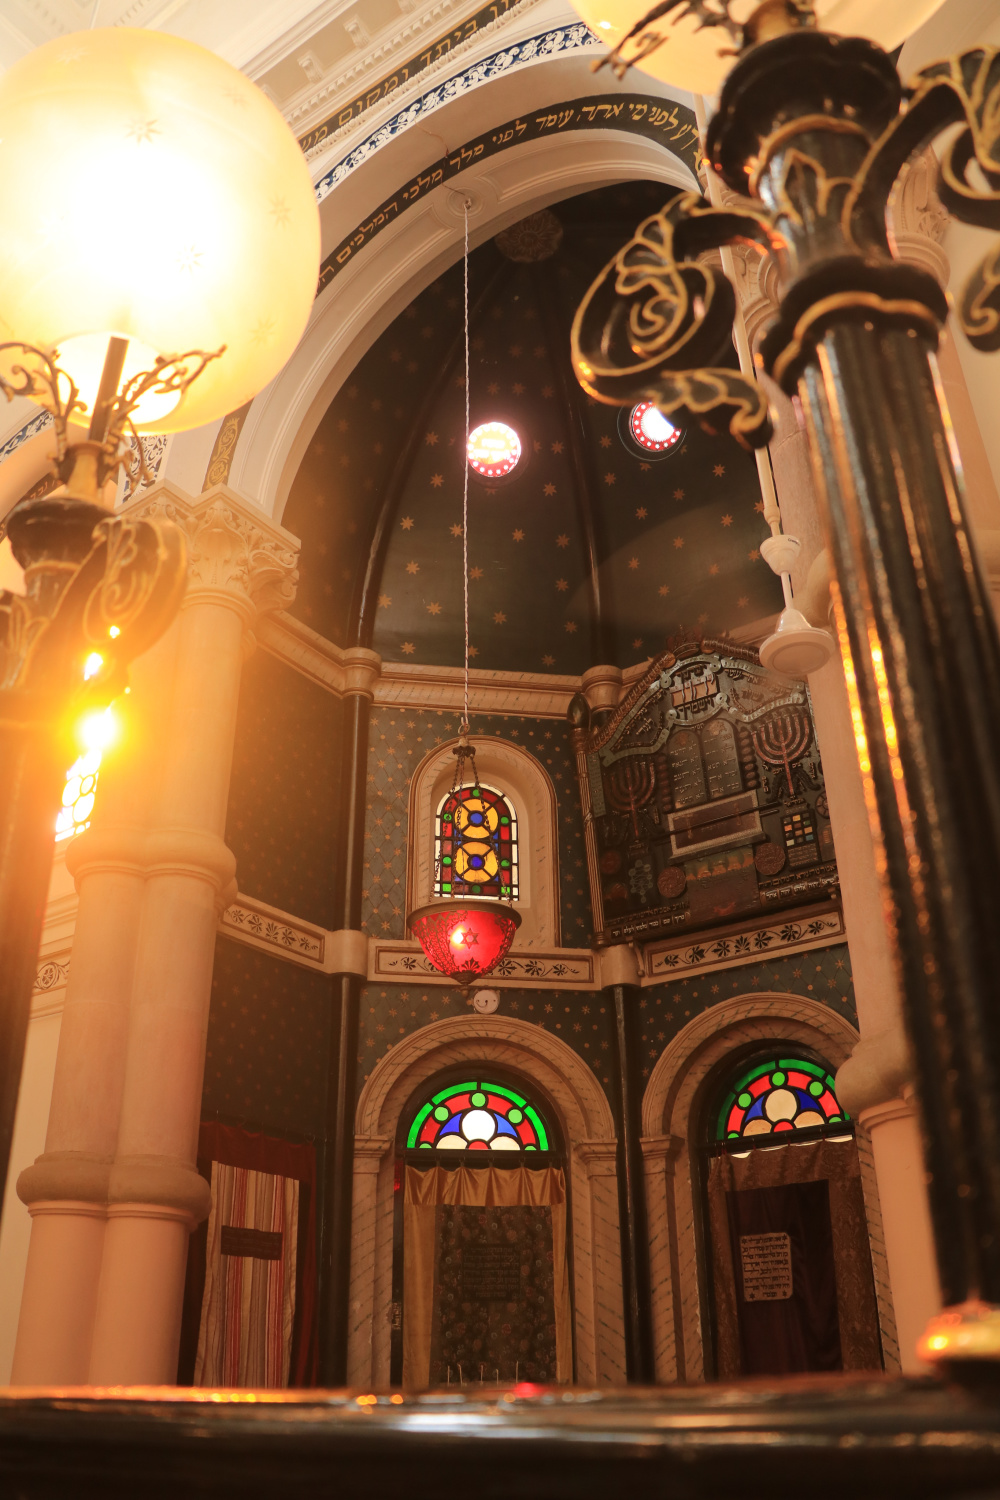 Inside the Beth El Synagogue